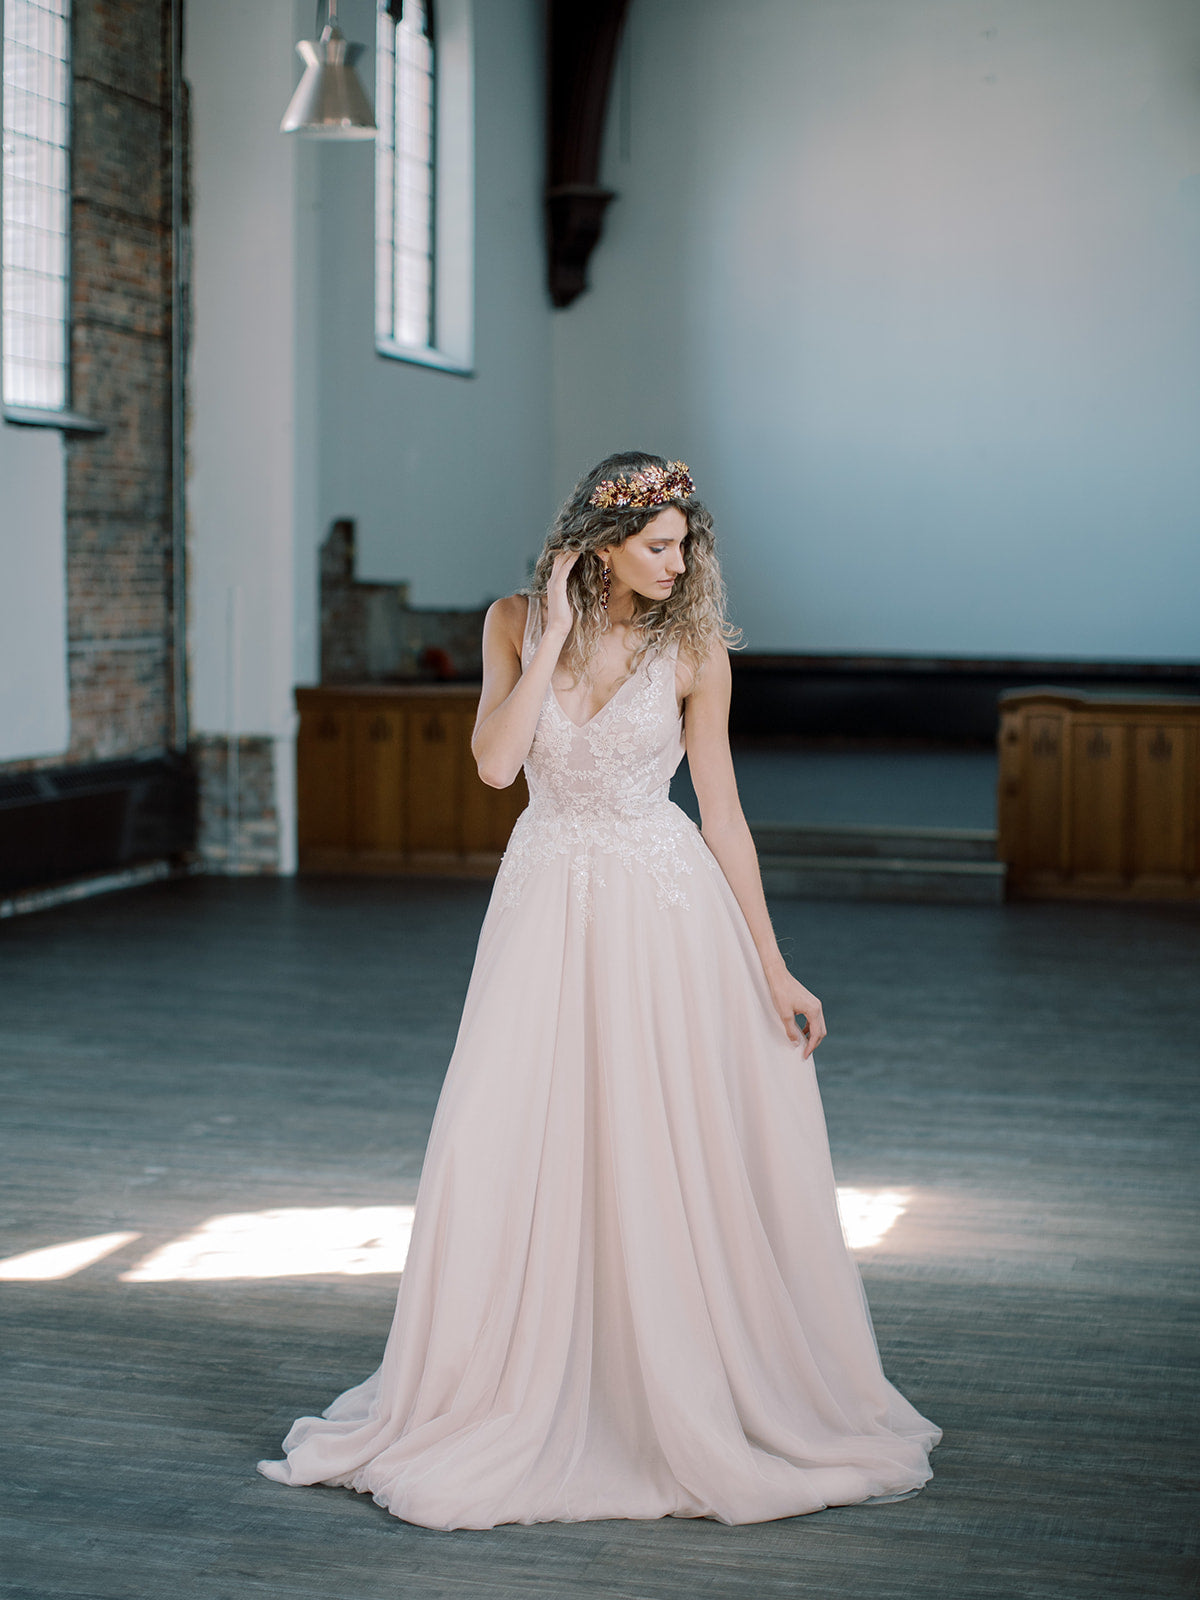 Crown Bridal - Dress & Attire - Vancouver, WA - WeddingWire